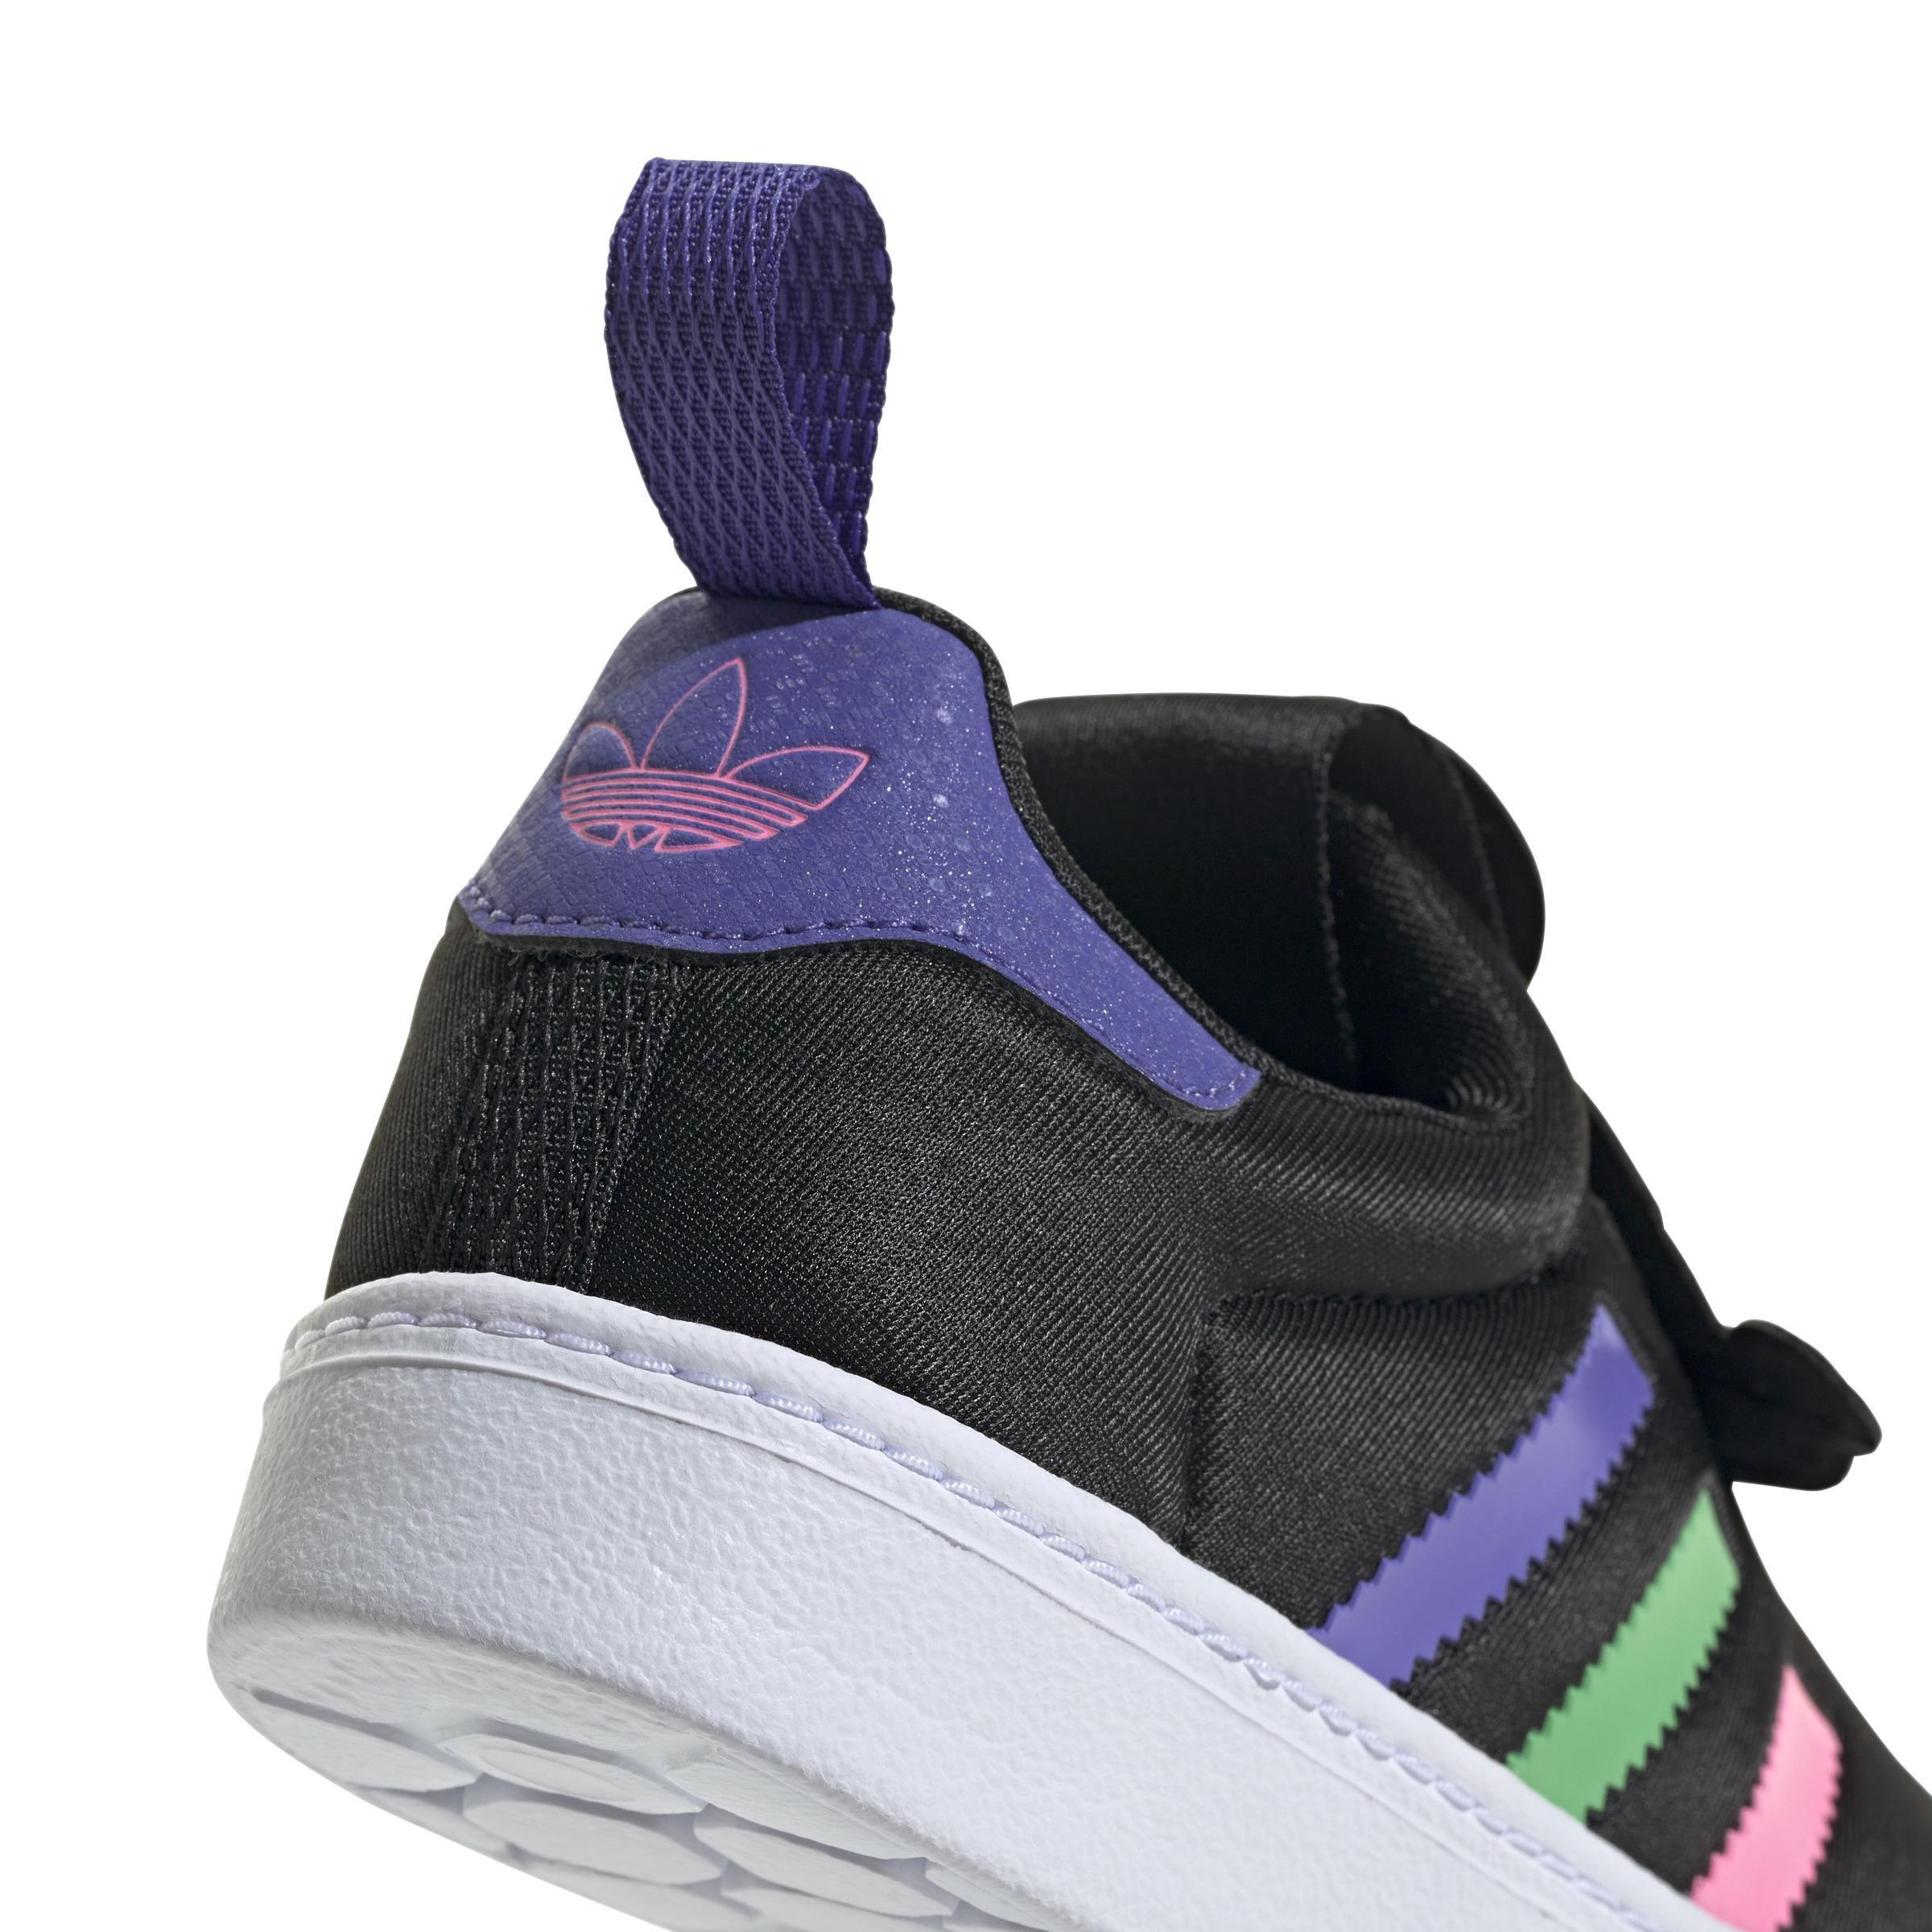 adidas - Unisex Kids Adidas Originals X Disney Mickey Superstar 360 Shoes, Black